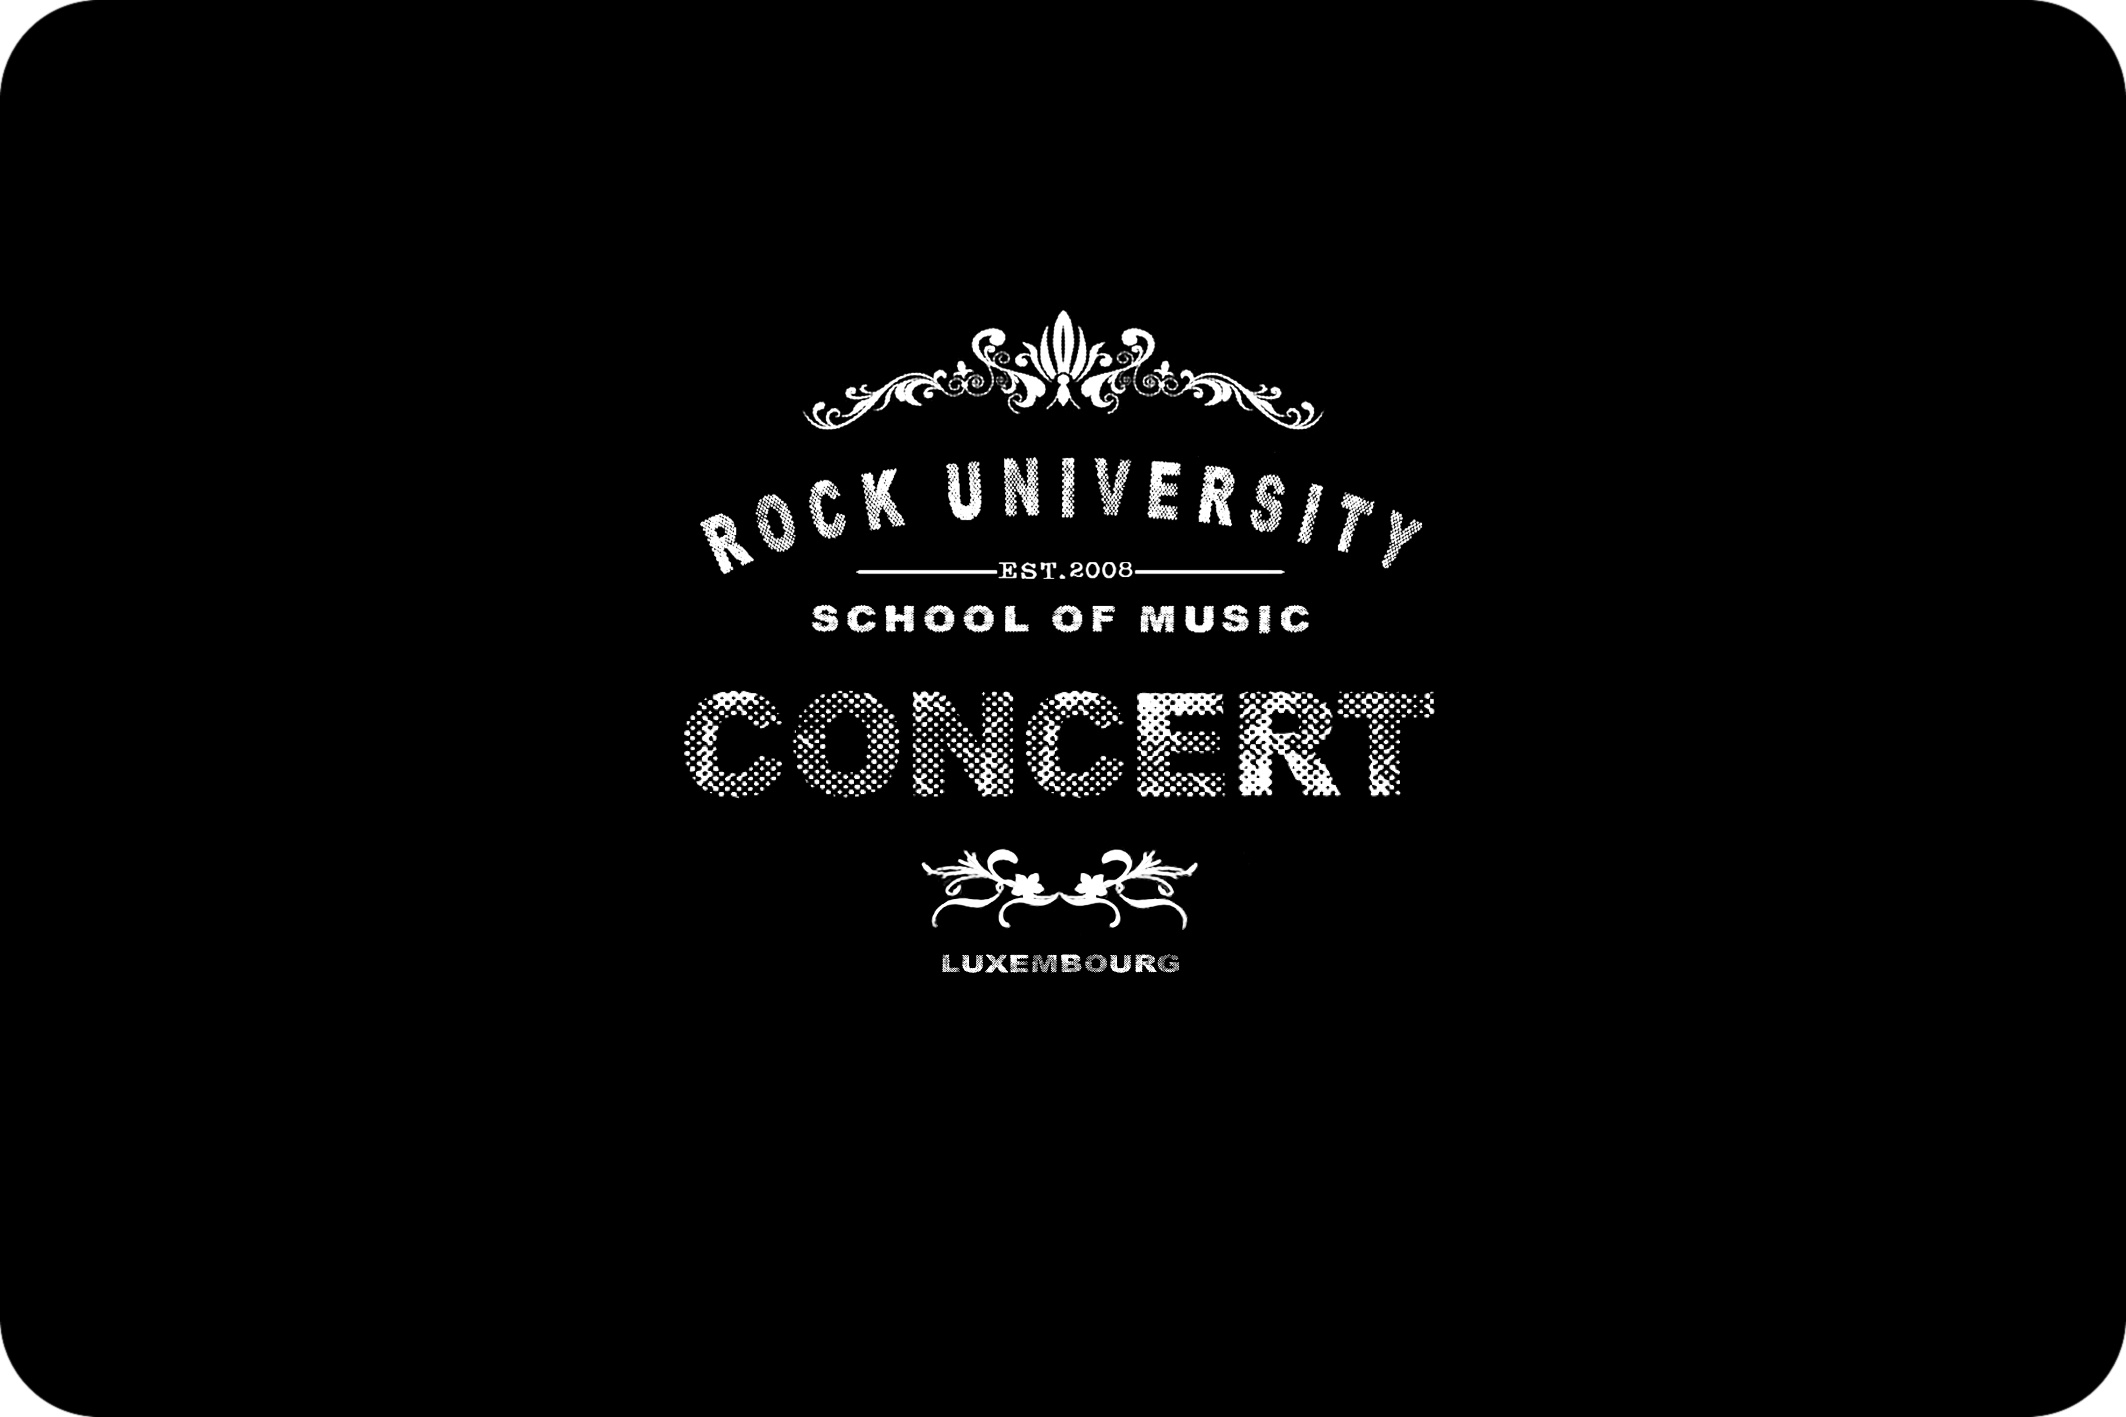 Rock university